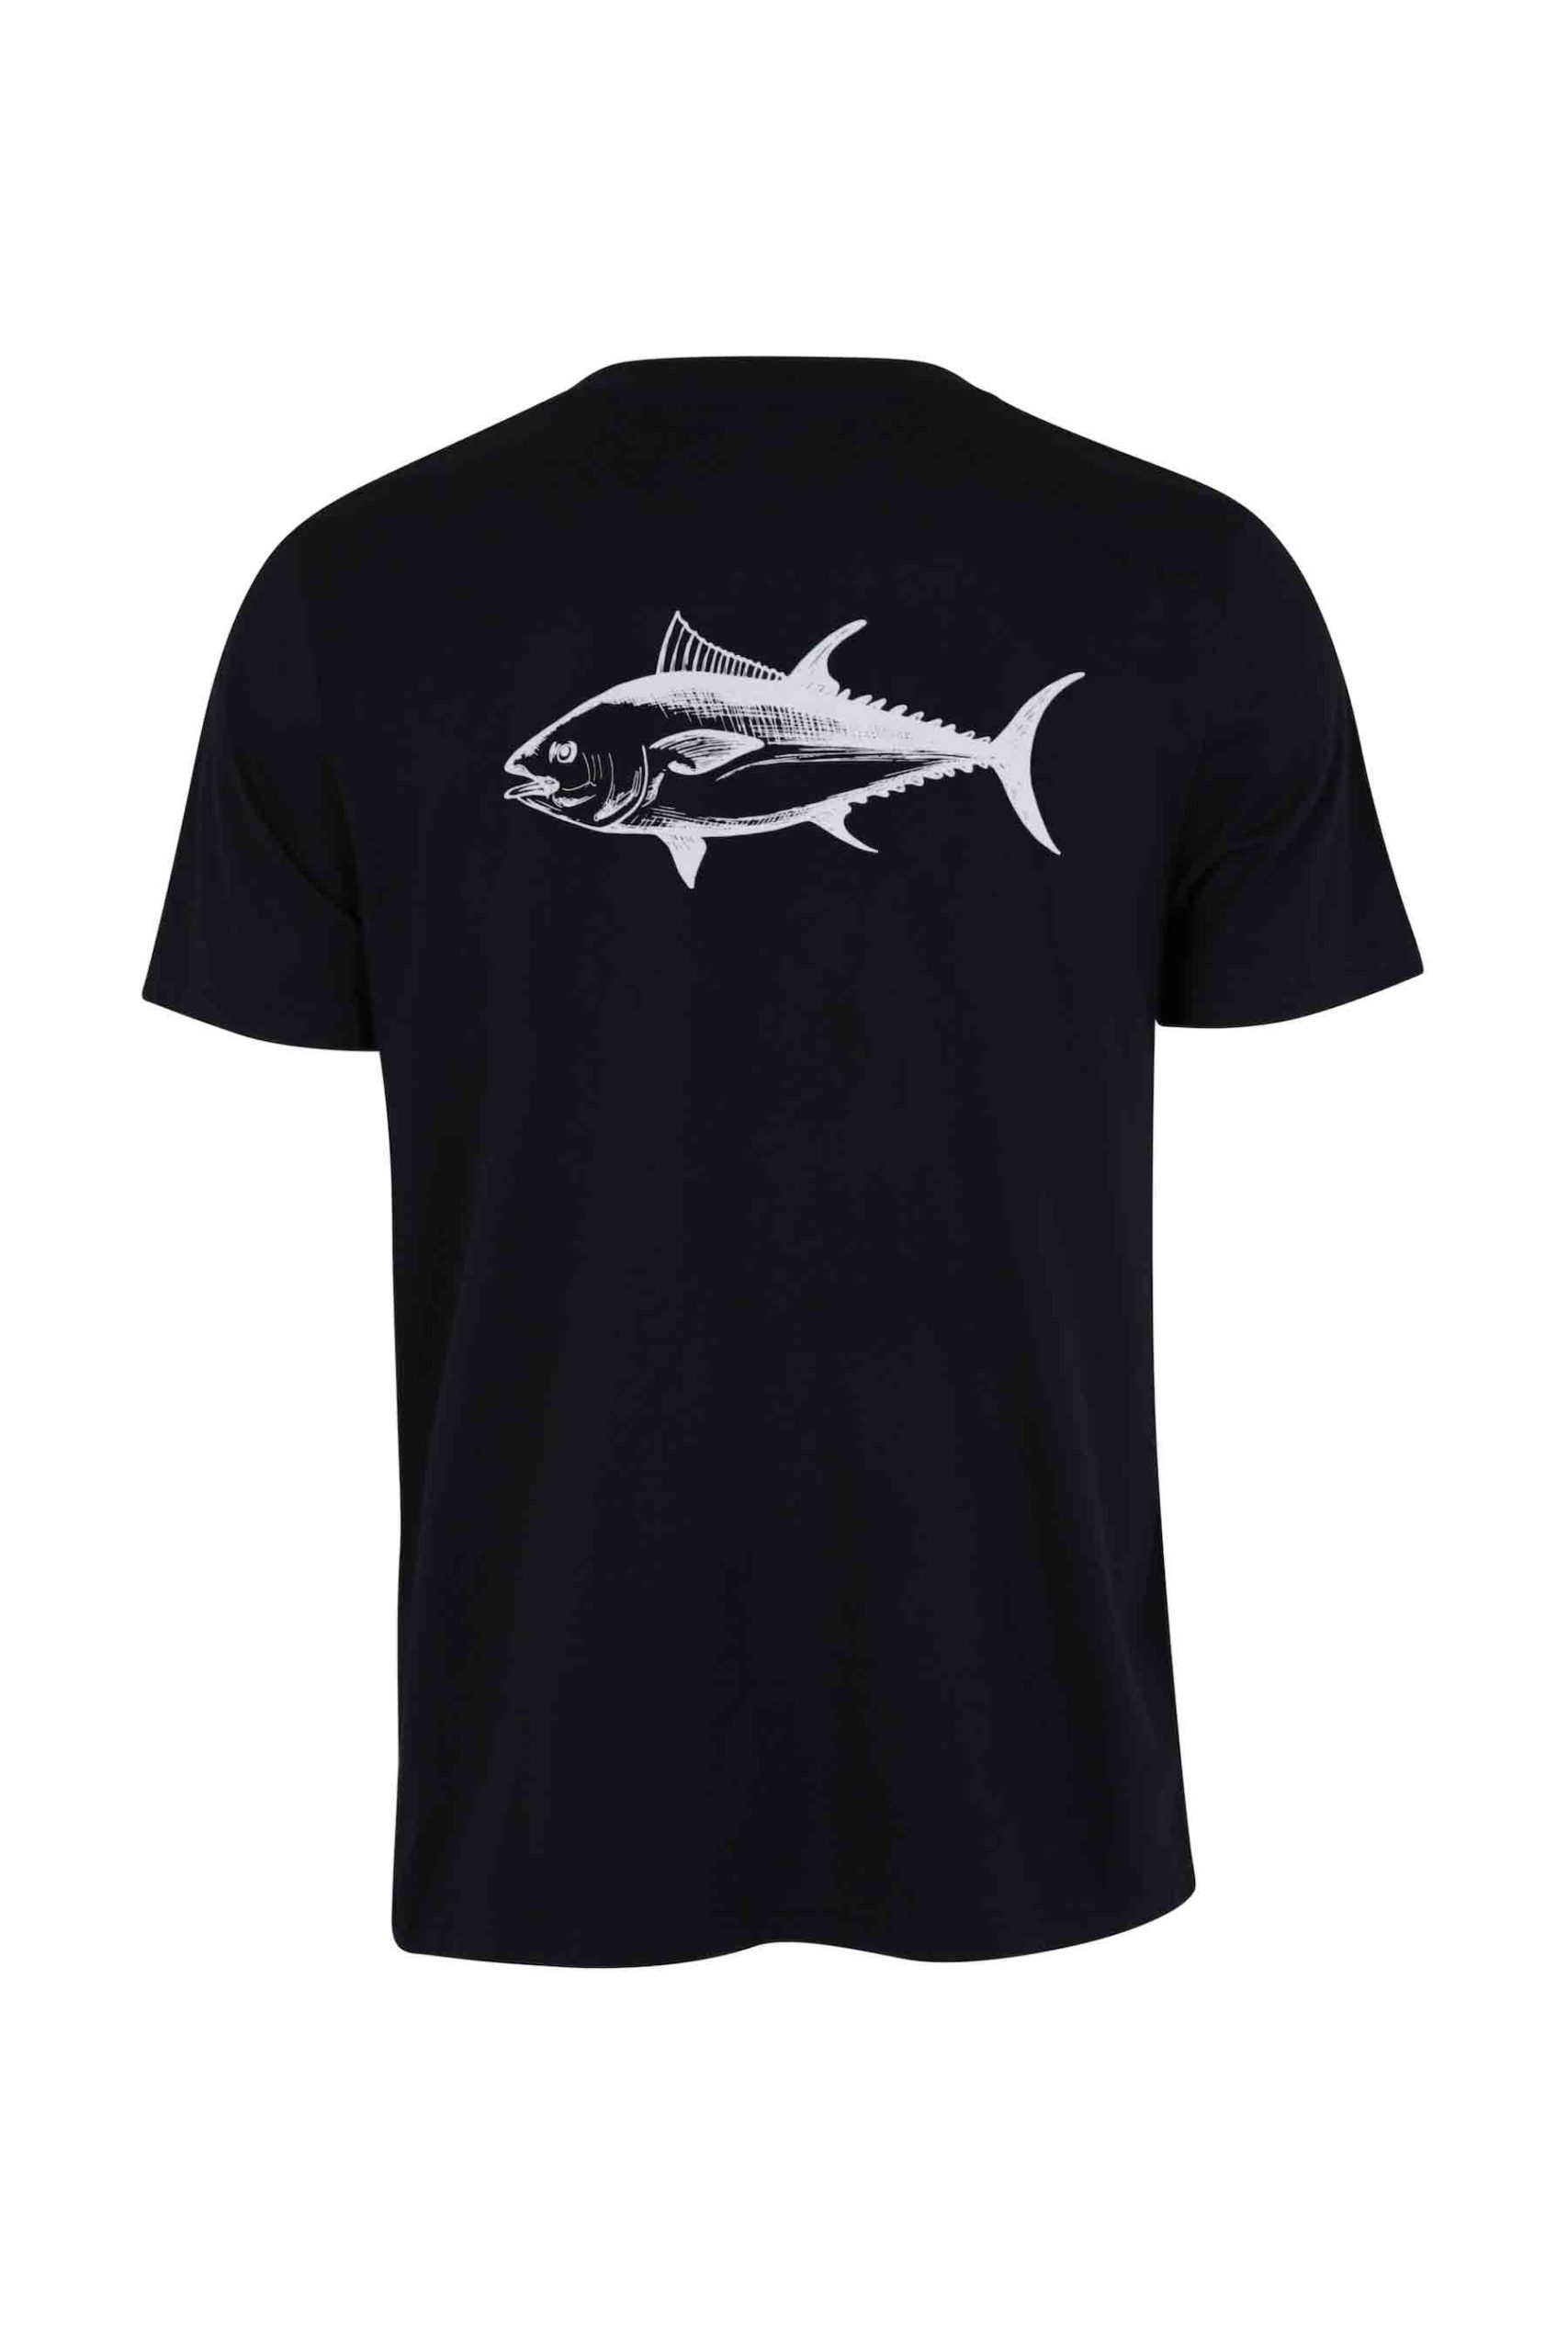 Stormline Tuna T-Shirt